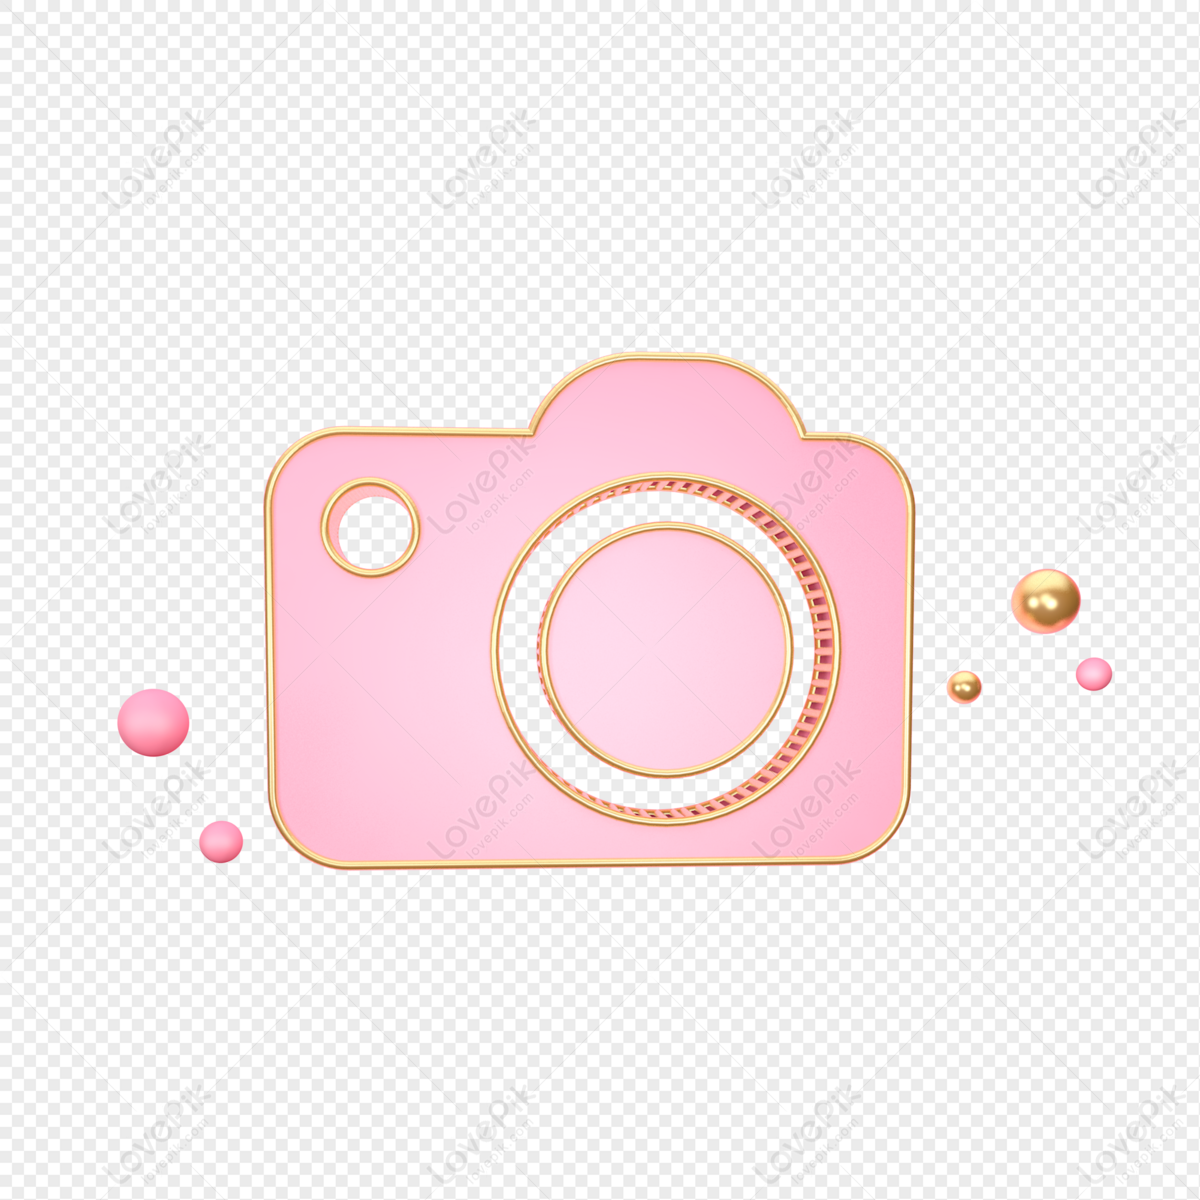 pink camera icon